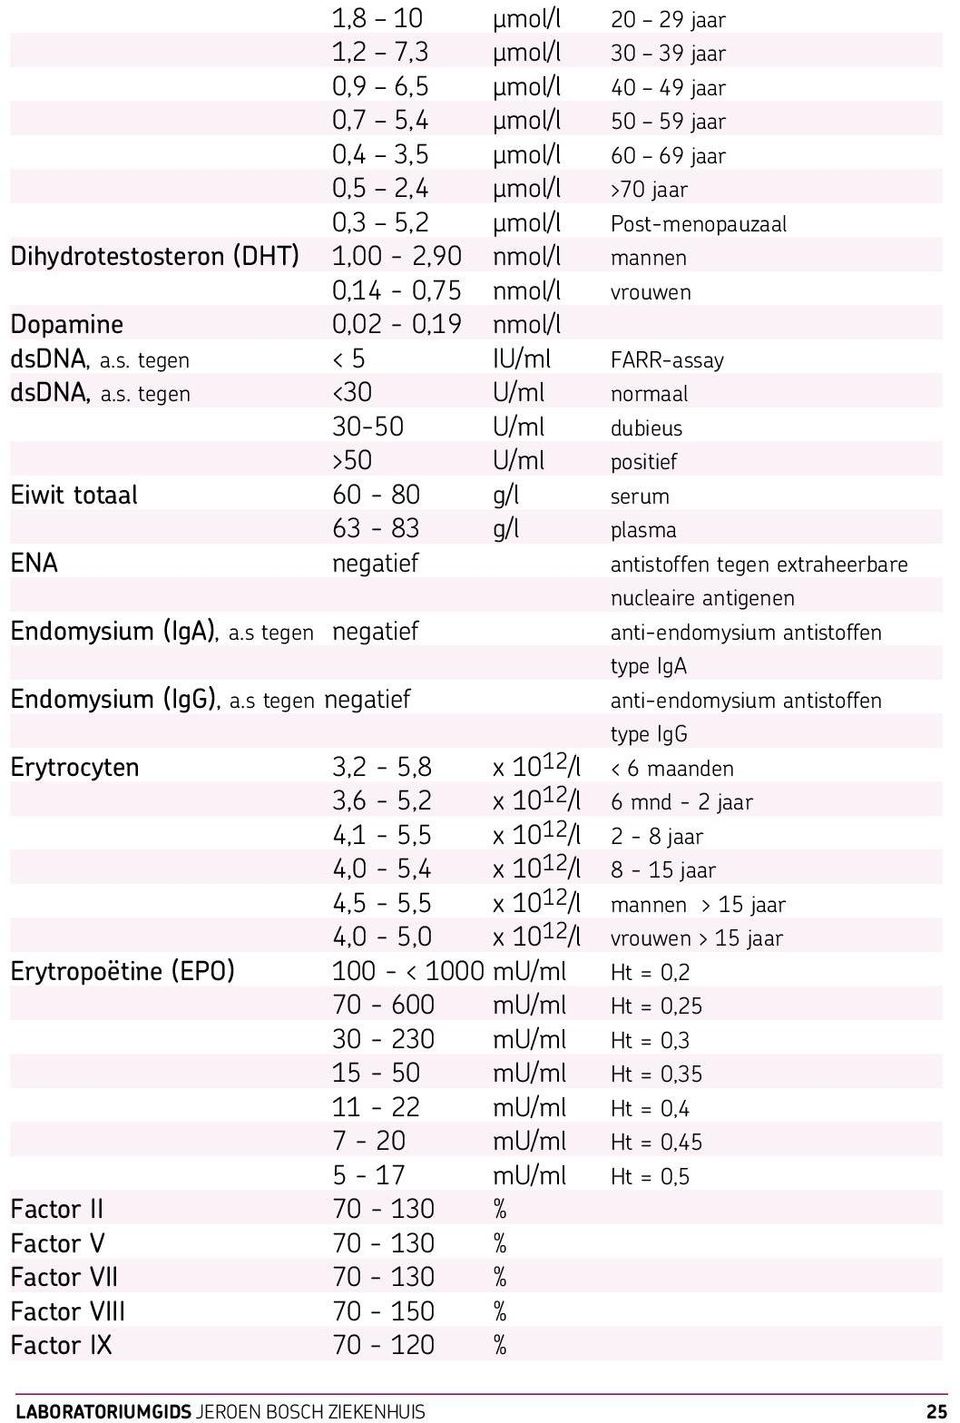 osteron (DHT) 1,00-2,90 nmol/l mannen 0,14-0,75 nmol/l vrouwen Dopamine 0,02-0,19 nmol/l dsdna, a.s. tegen < 5 IU/ml FARR-assay dsdna, a.s. tegen <30 U/ml normaal 30-50 U/ml dubieus >50 U/ml positief Eiwit totaal 60-80 g/l serum 63-83 g/l plasma ENA negatief antistoffen tegen extraheerbare nucleaire antigenen Endomysium (IgA), a.